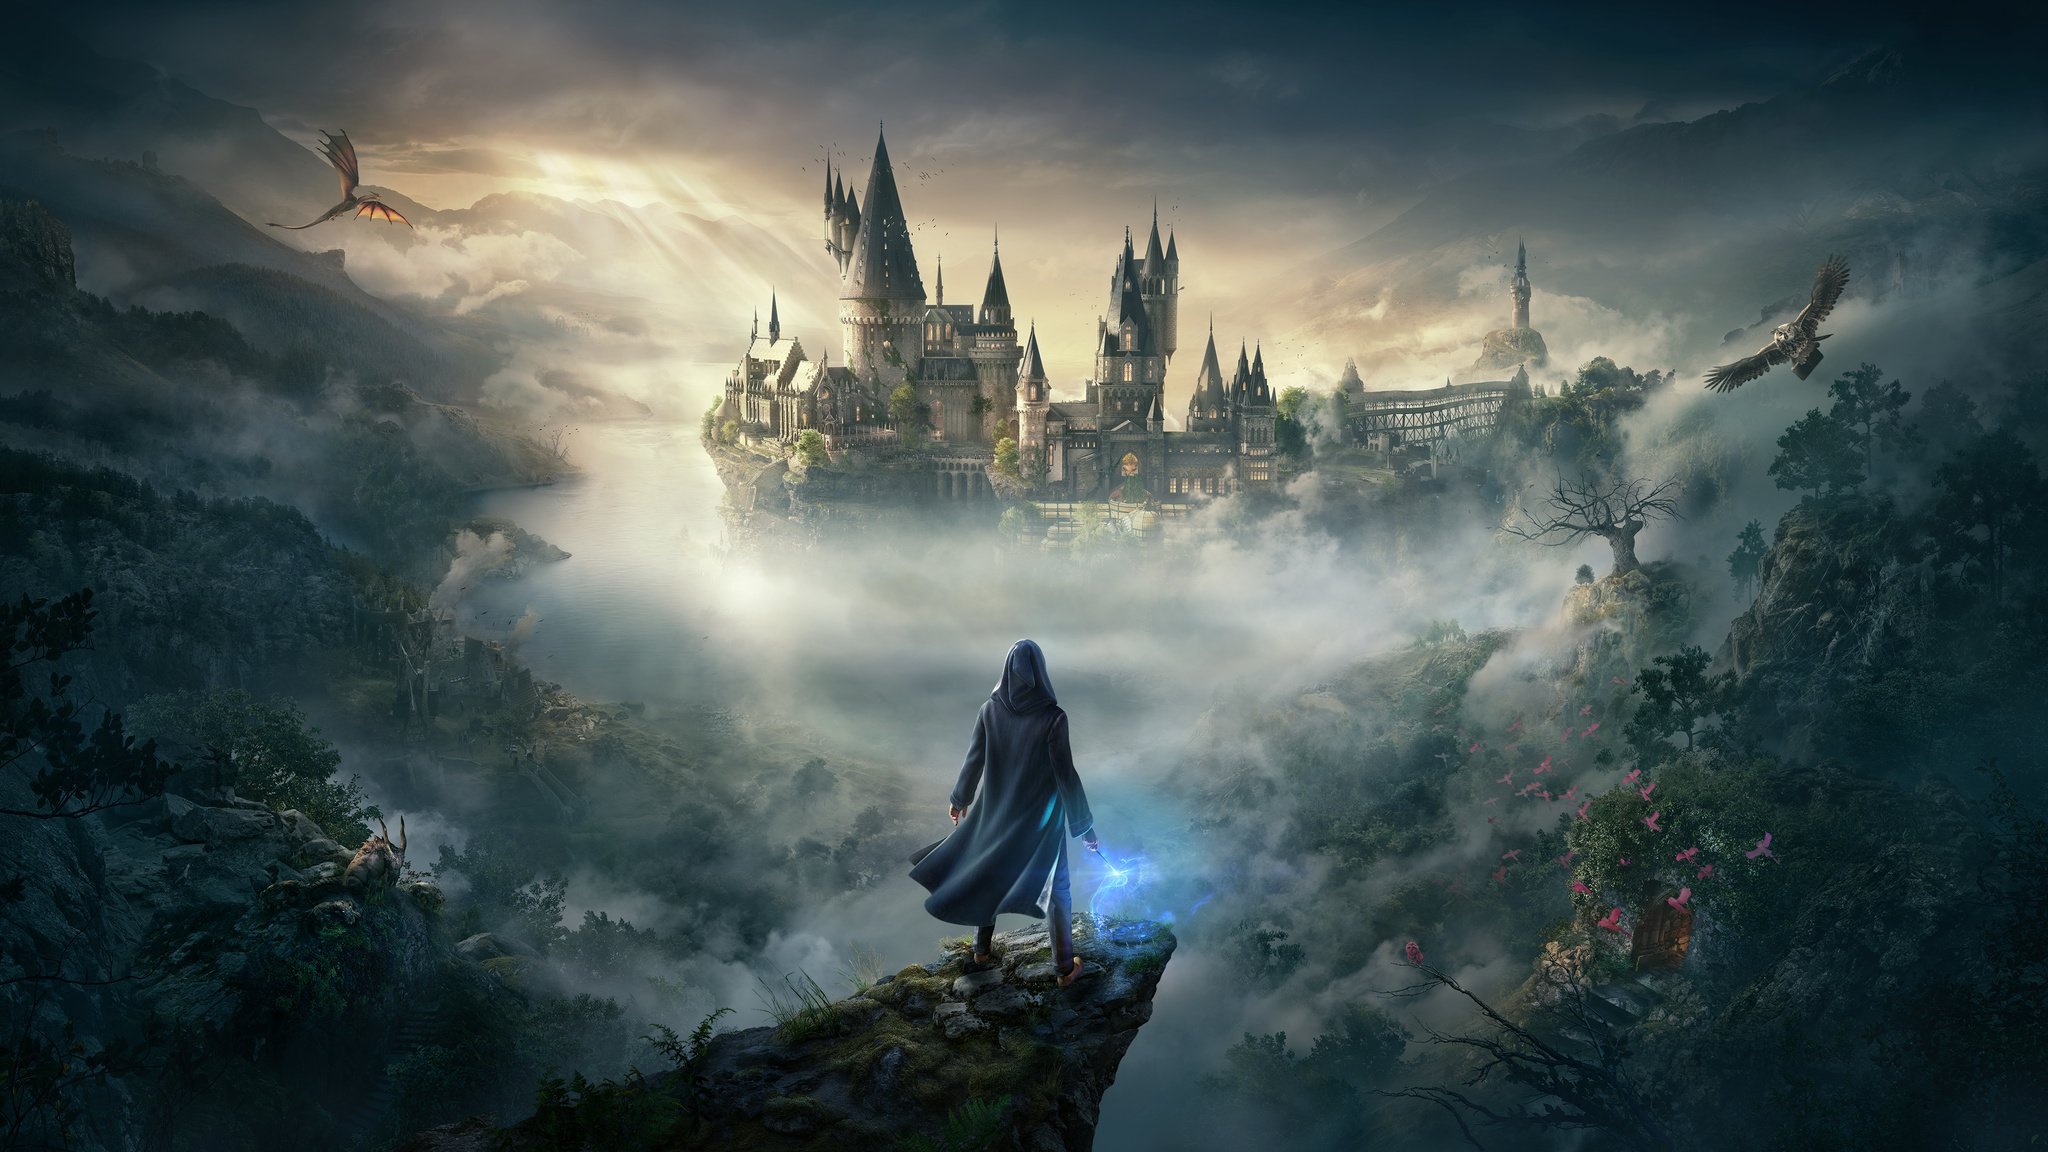 Hogwarts Legacy (Xbox Series X) — Edenstorm